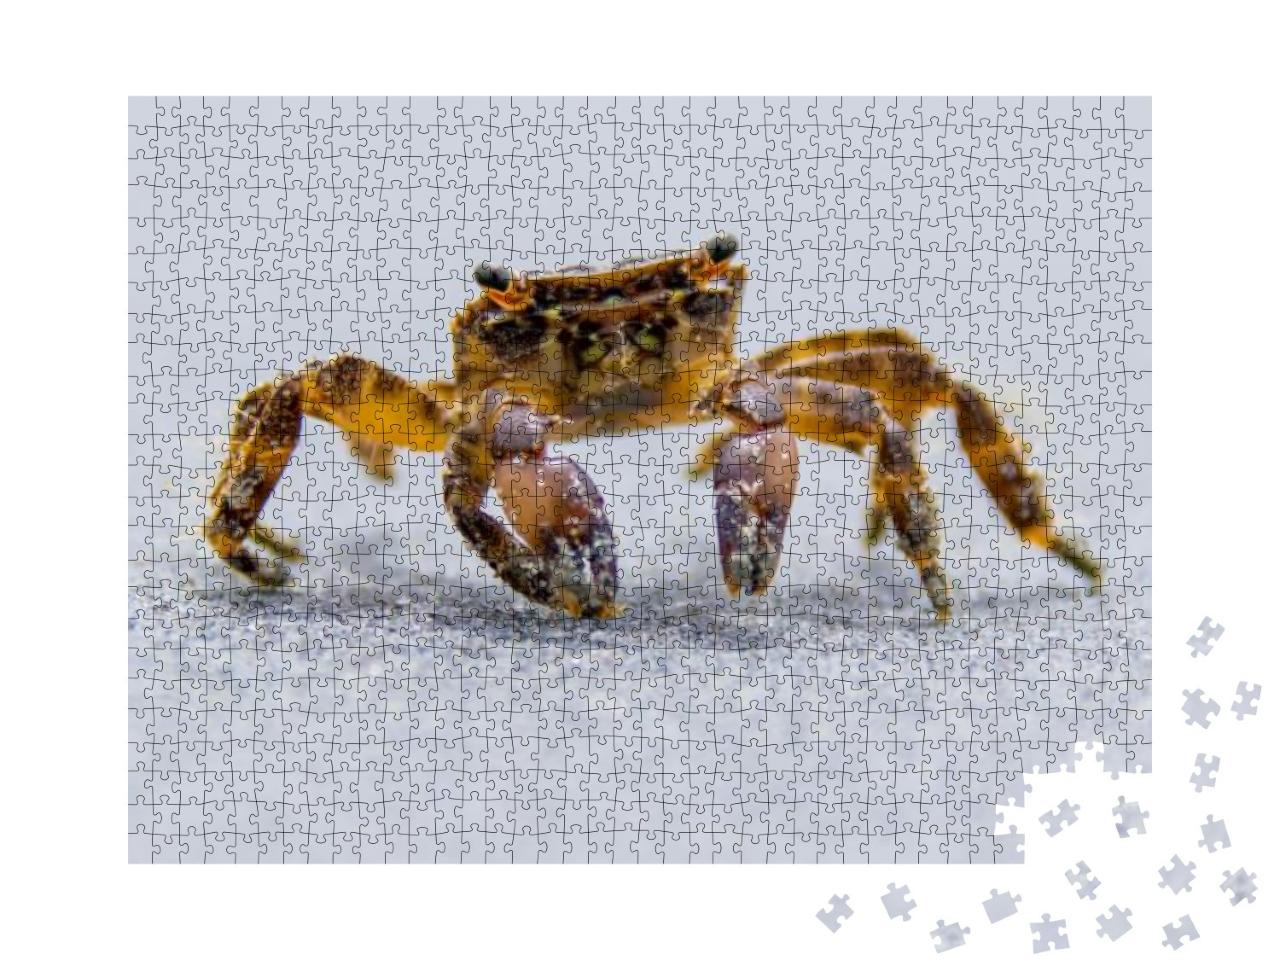 A Beach Crab Runs Along the Shore of a Sea... Jigsaw Puzzle with 1000 pieces